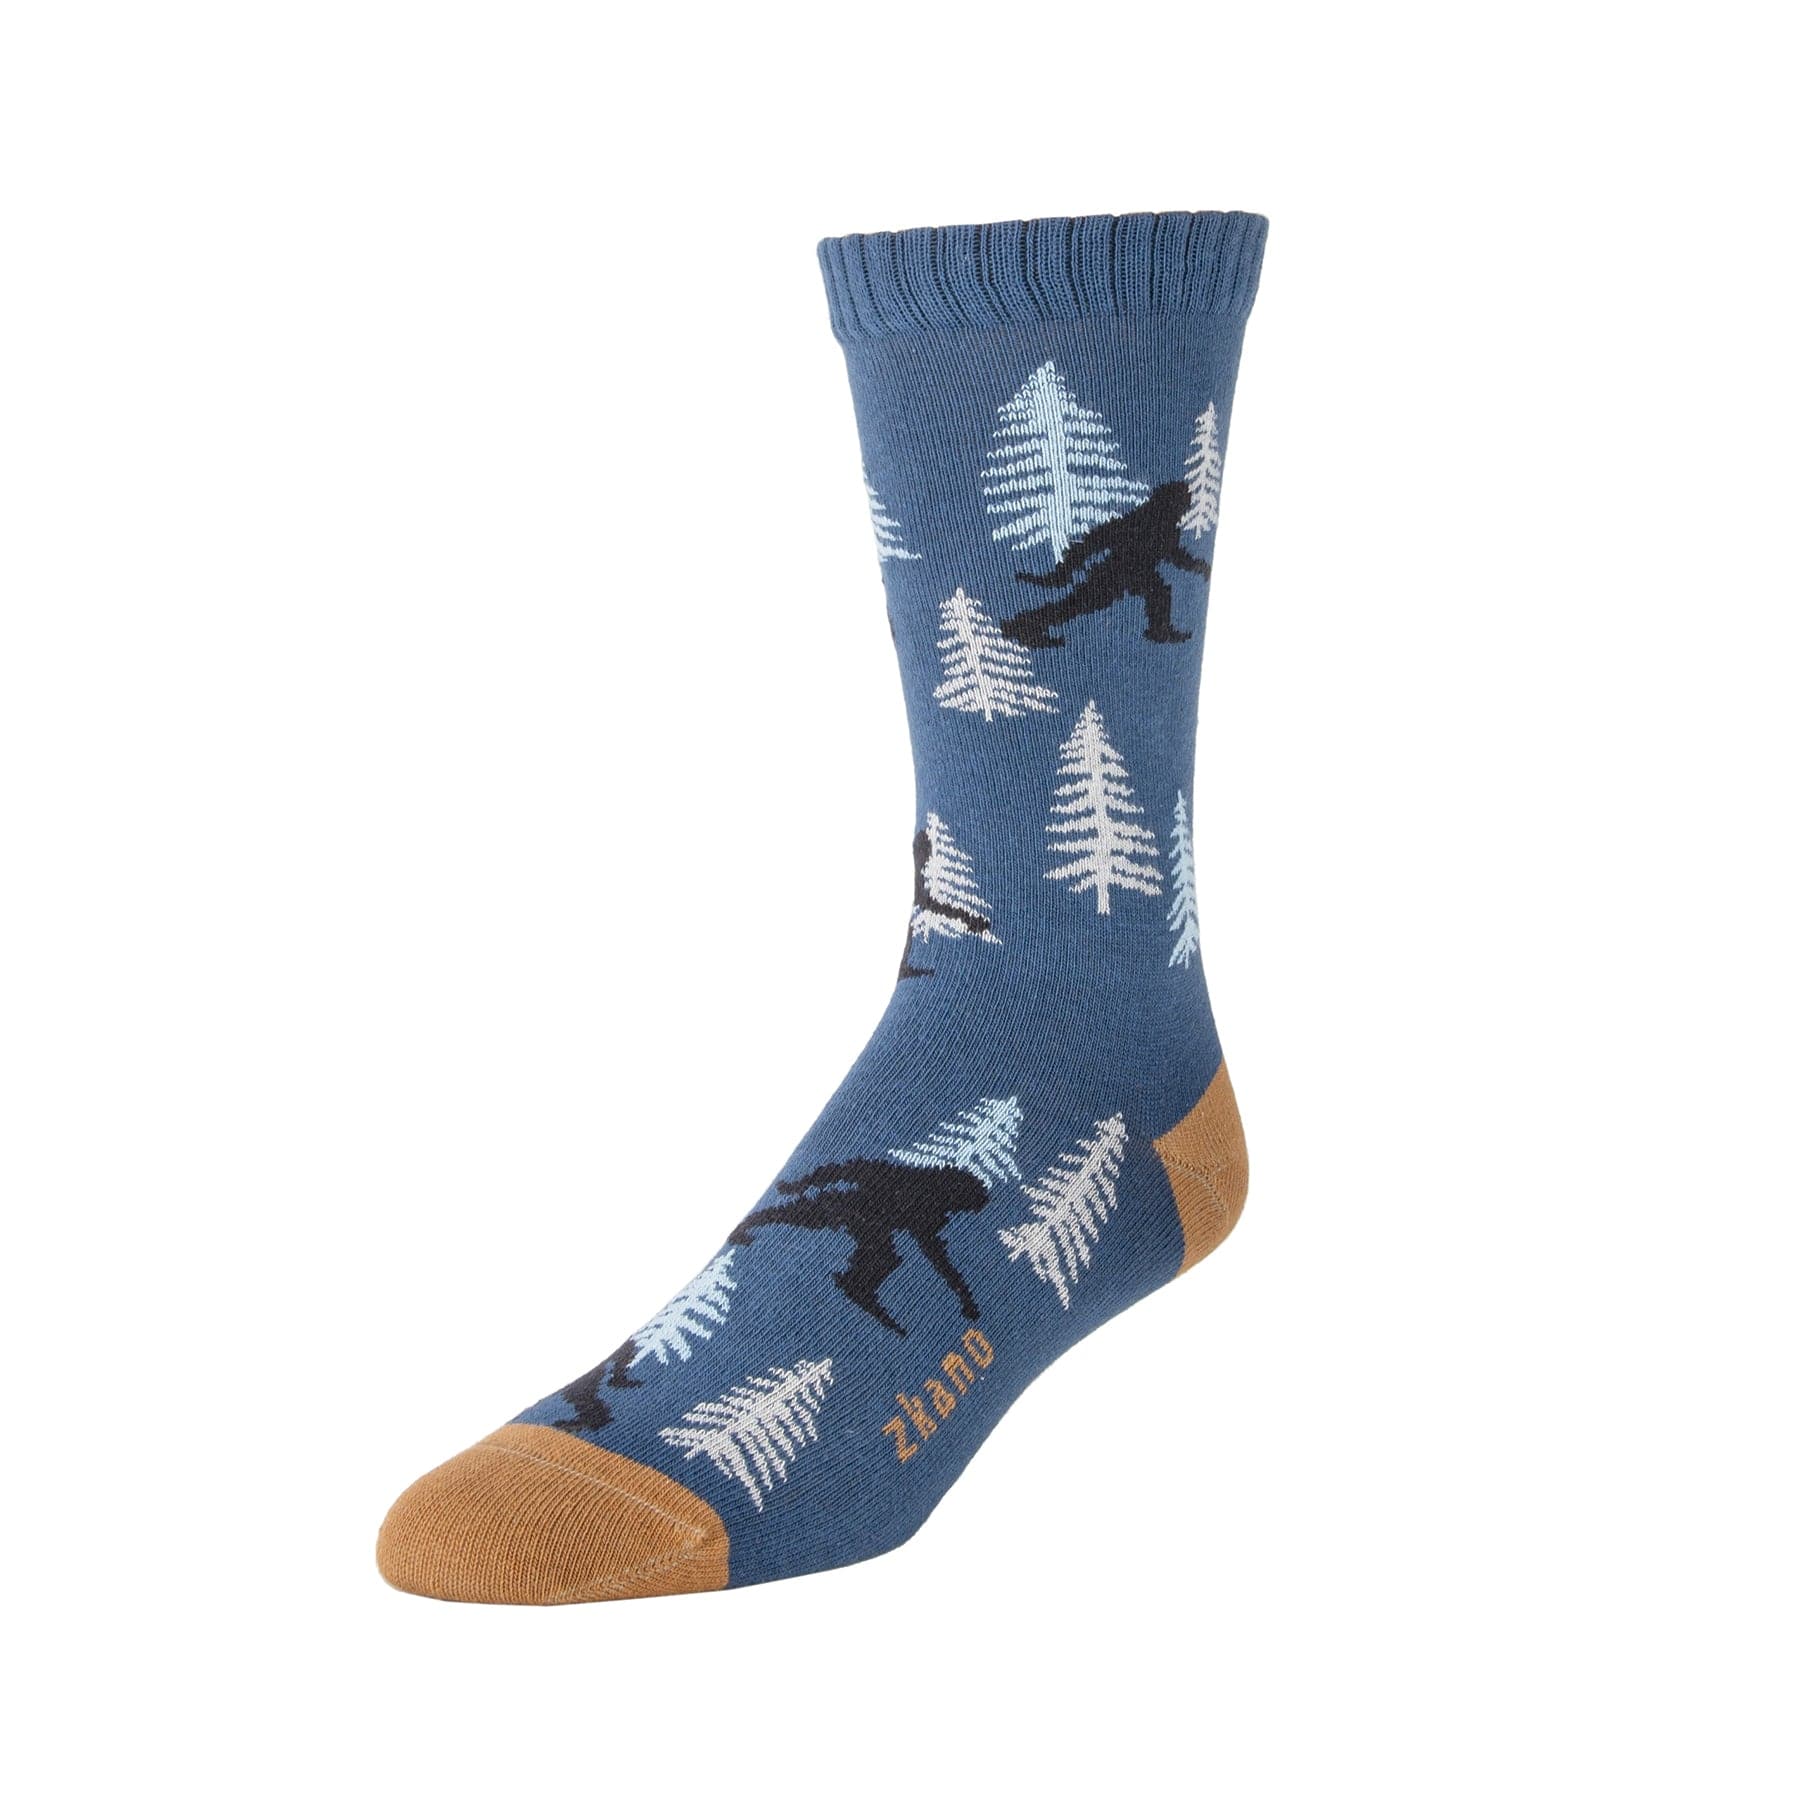 Socks Cotton Into Crew Organic – Navy zkano Wilderness - - the socks